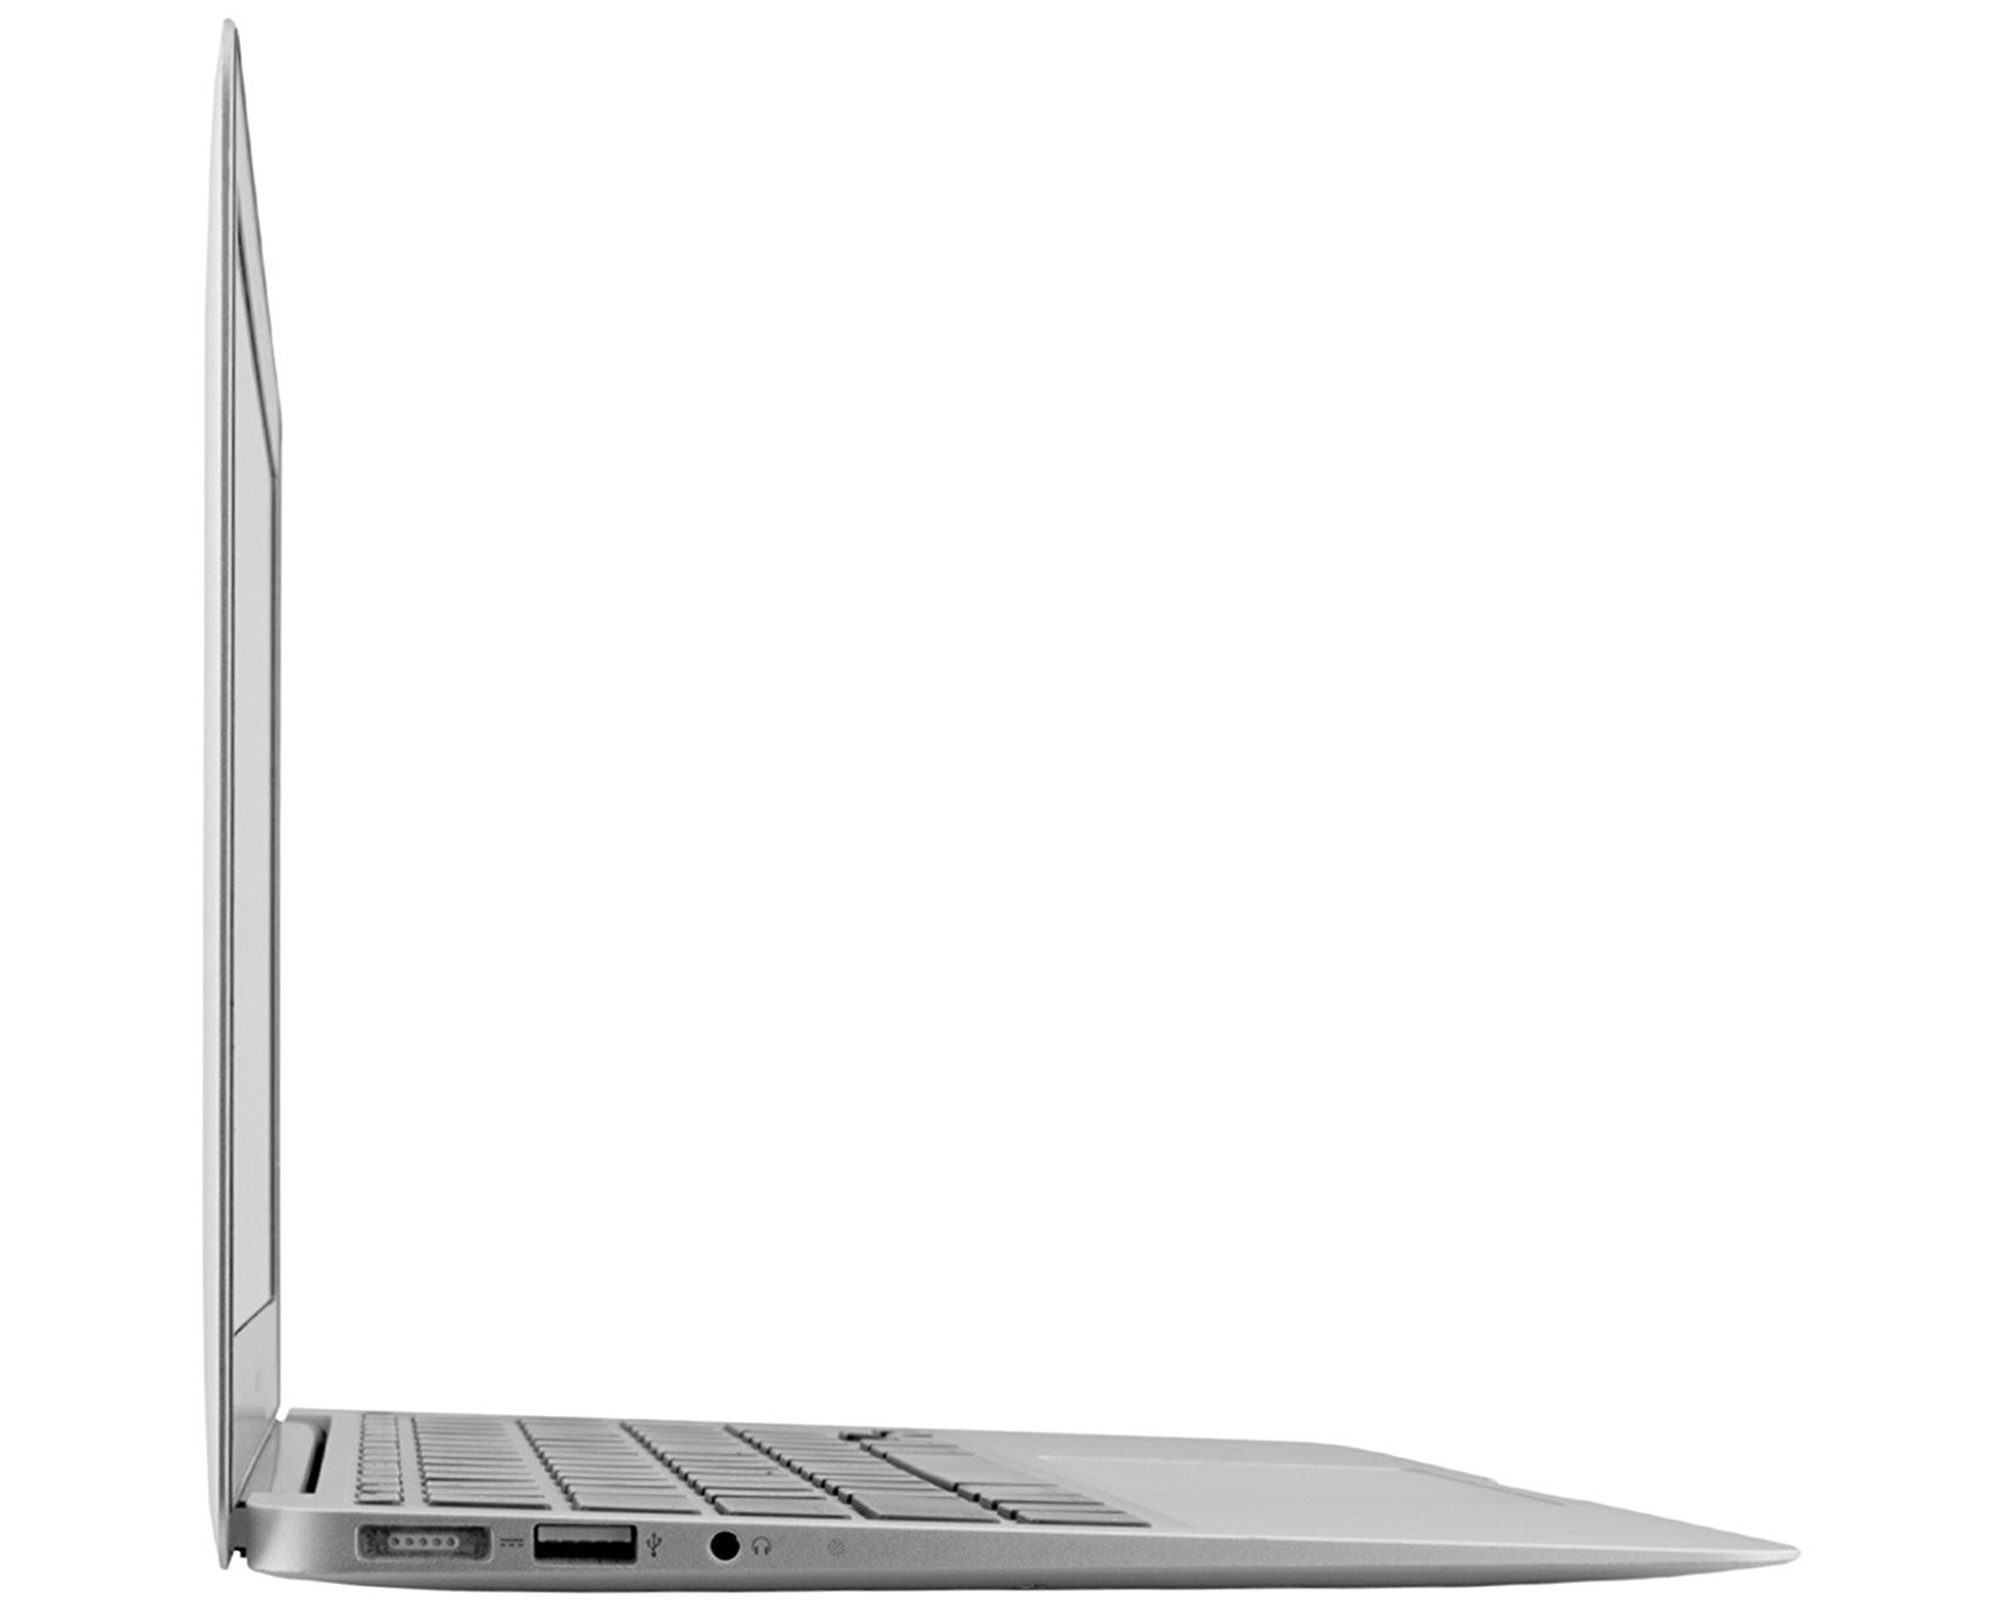 Restored Apple MacBook Air, 11.6" Laptop, Intel Core i5, 4GB RAM, 128GB SSD, No, Mac OS, Silver, MJVM2LL/A (Refurbished) - image 5 of 6